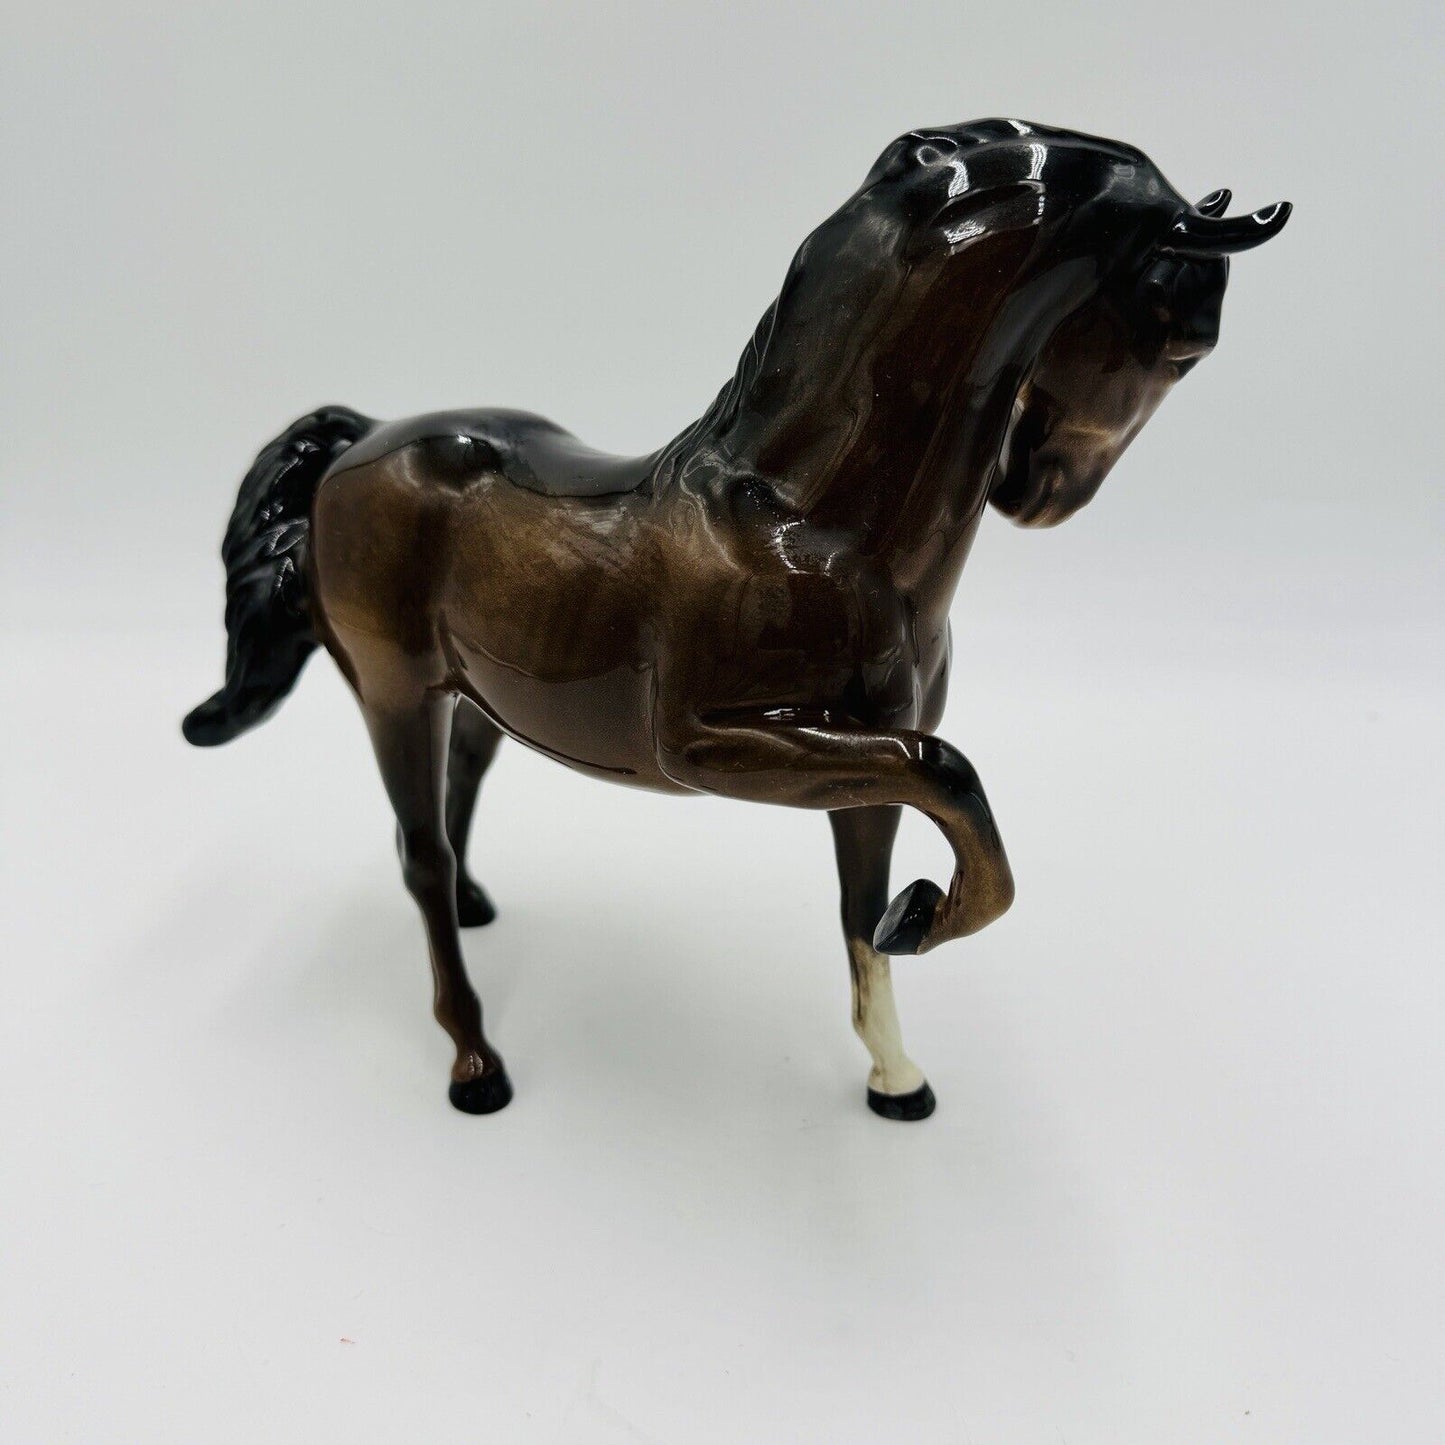 Vintage Beswick England Ceramic High Gloss Stallion Horse Figurine Mint 7” H